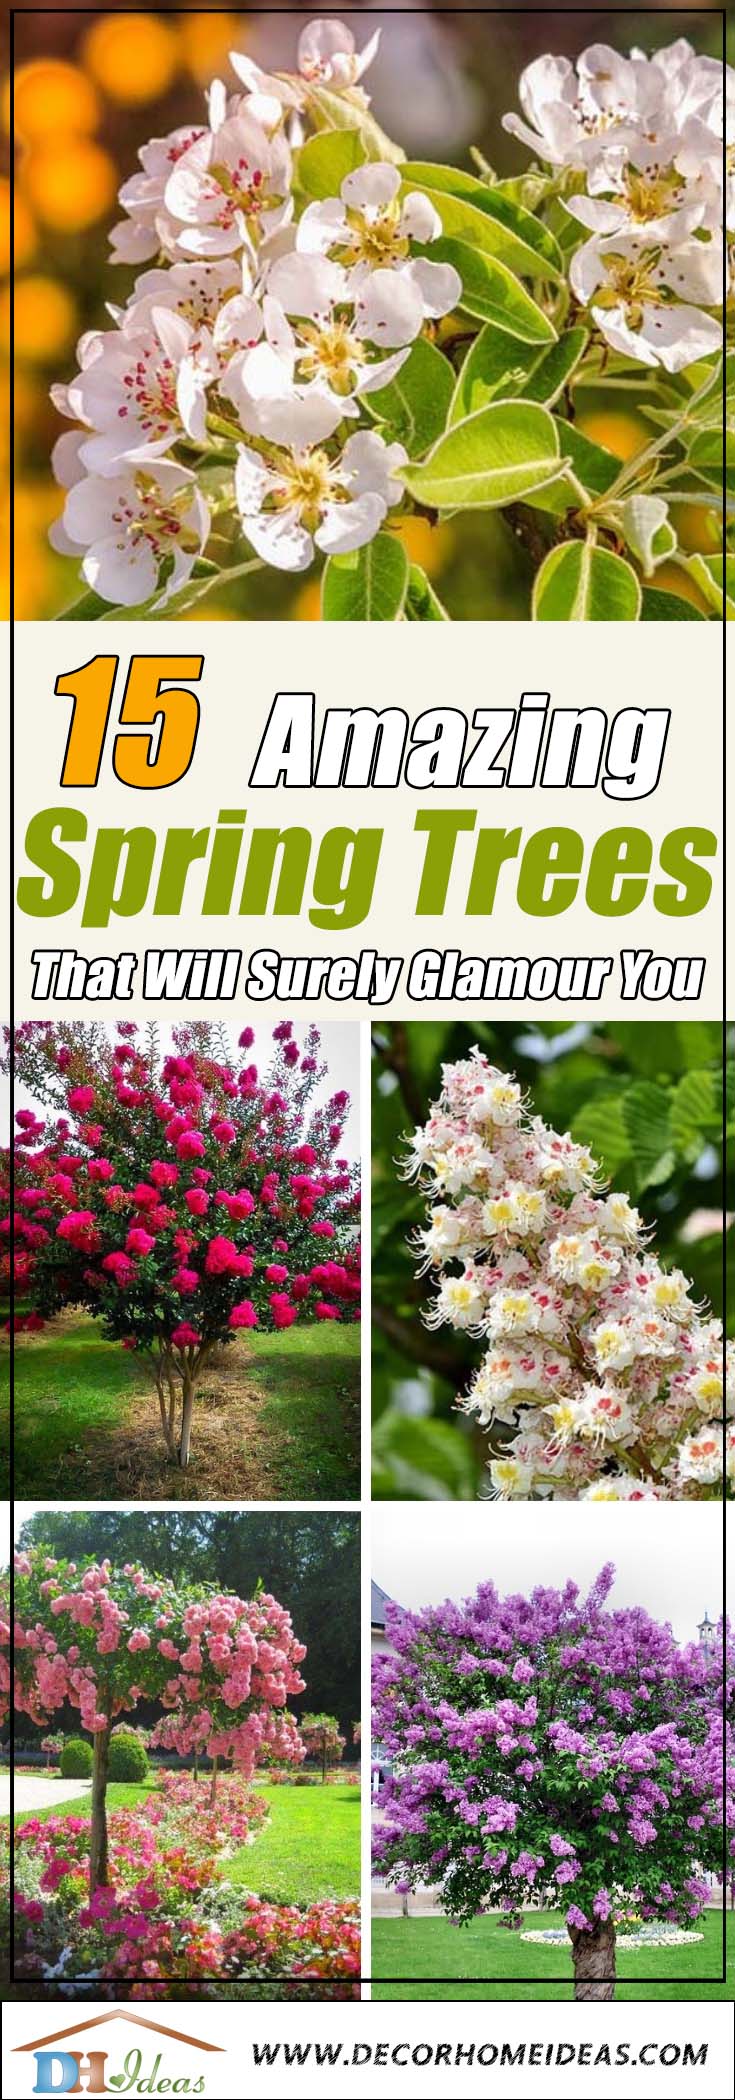 Spring Flowering Trees #spring #trees #springtrees #garden #decorhomeideas